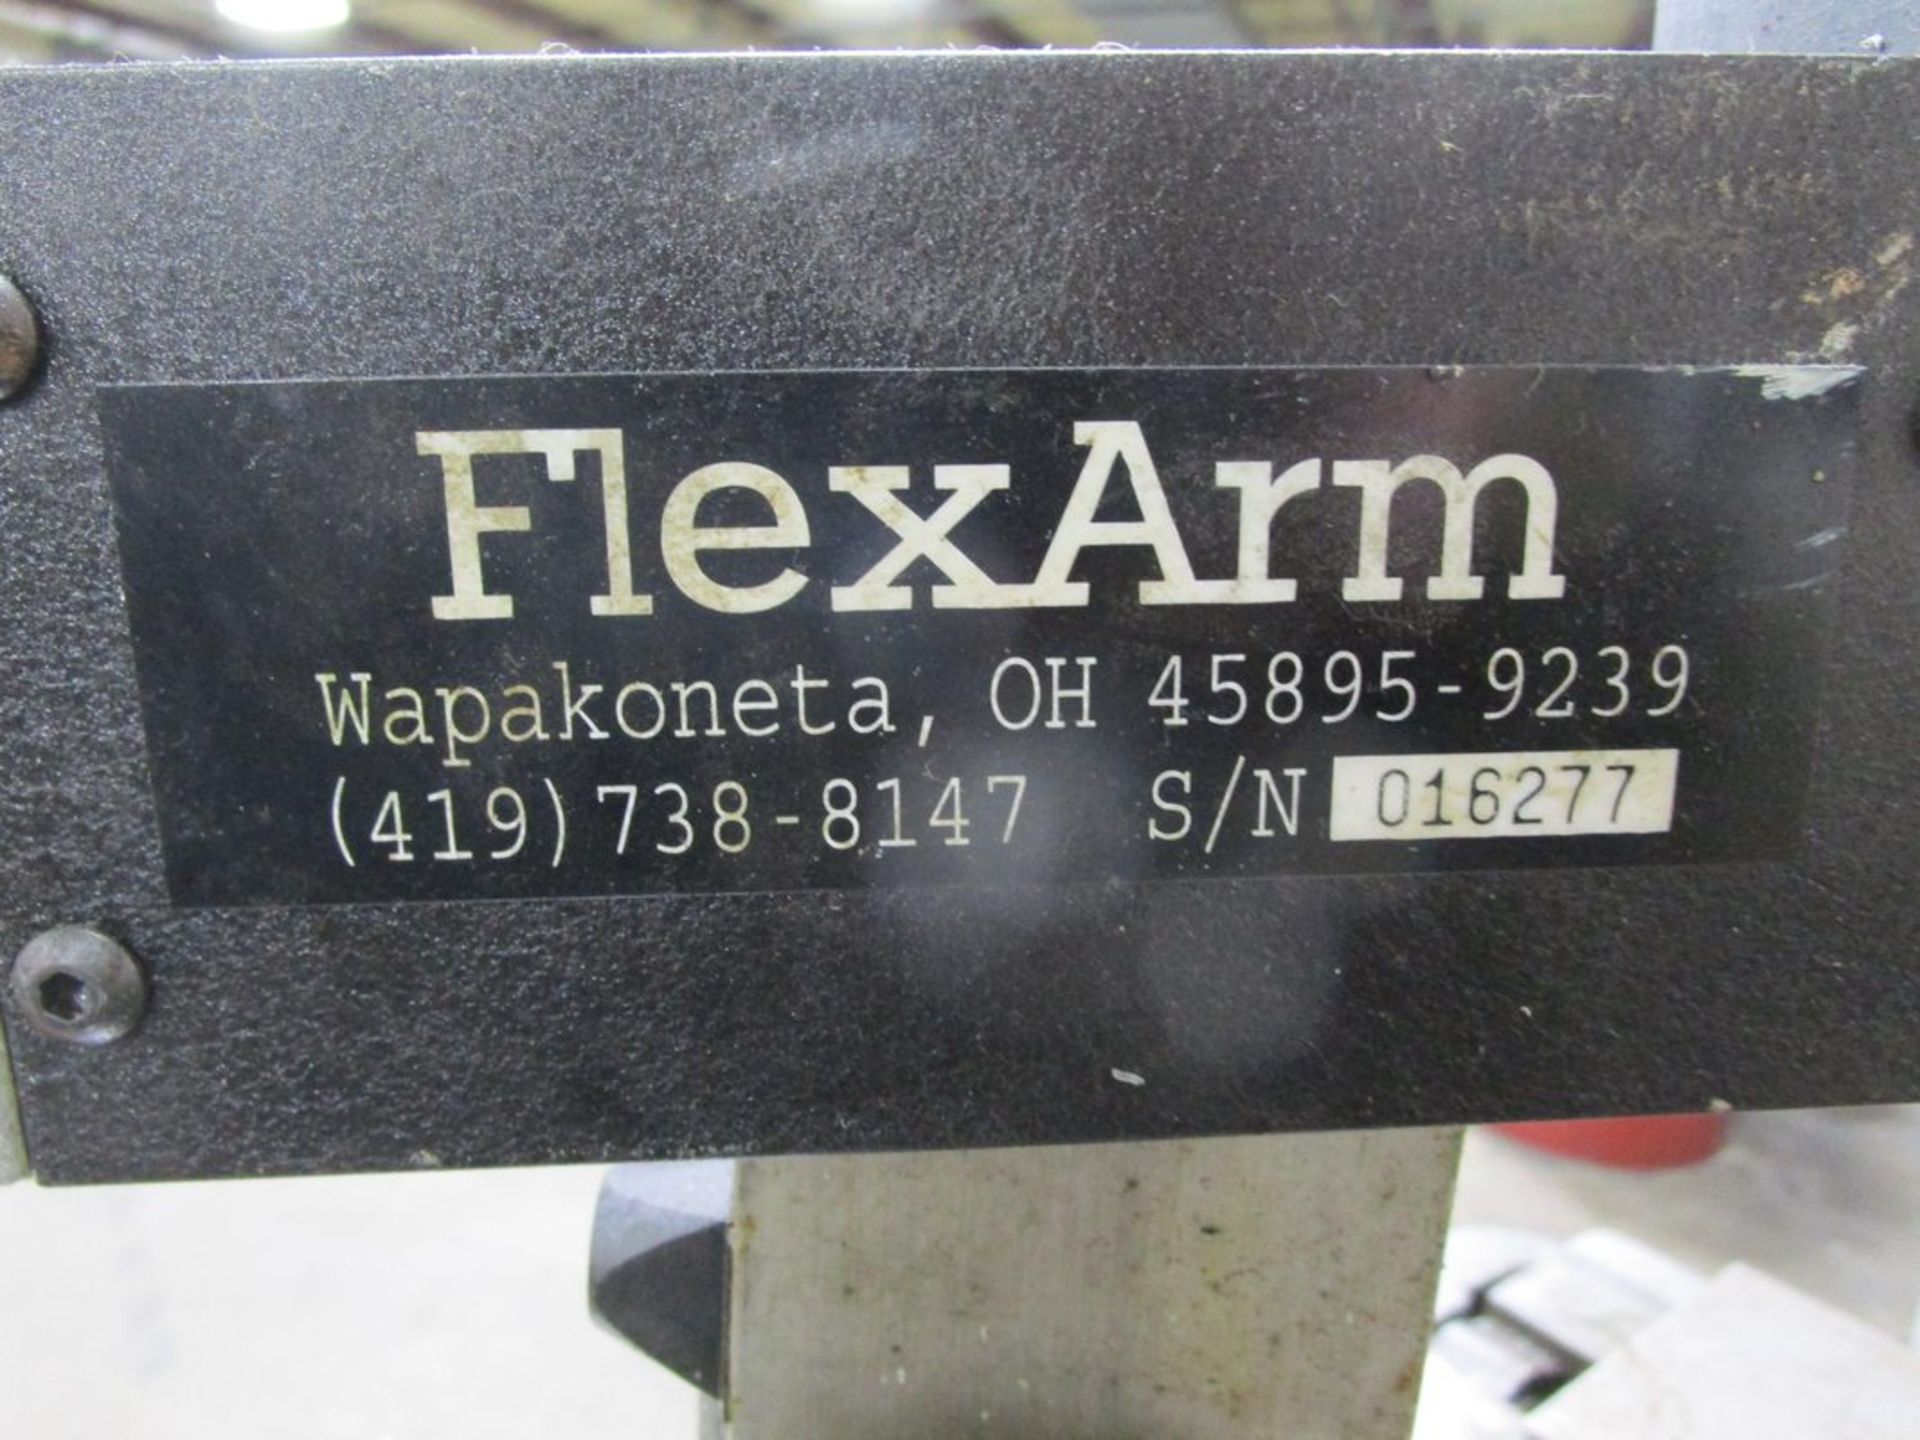 Flex Arm Portable Work Station, S/N 016277 - Image 5 of 5